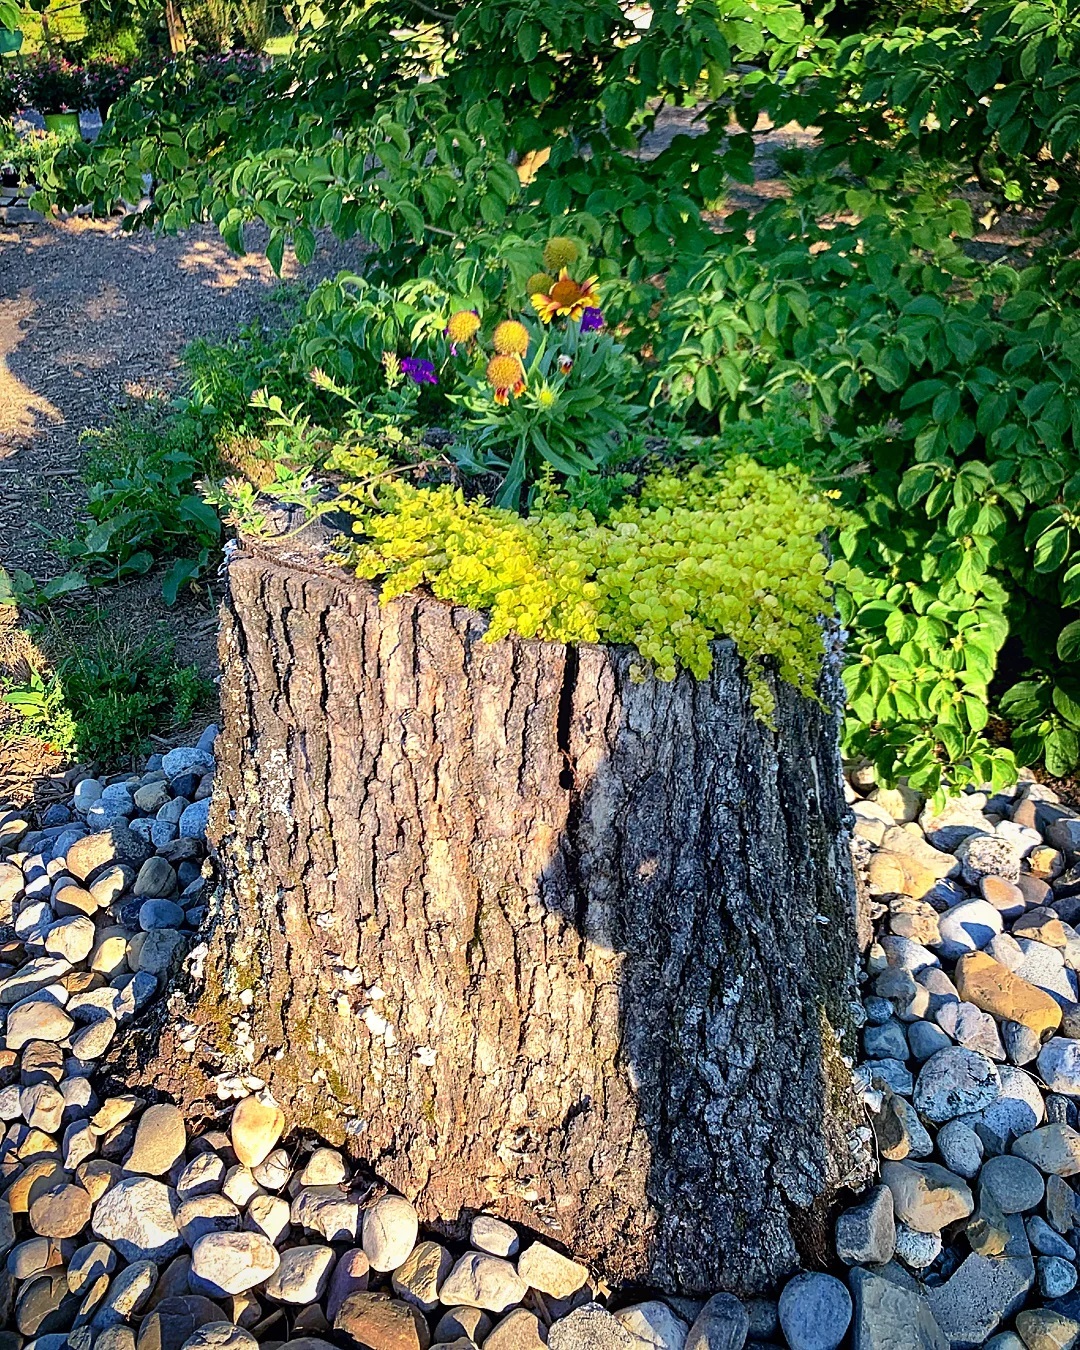 Decorative tree stump with flowers and greenery. Photo via Instagram user @gardenkeepersofvirginia